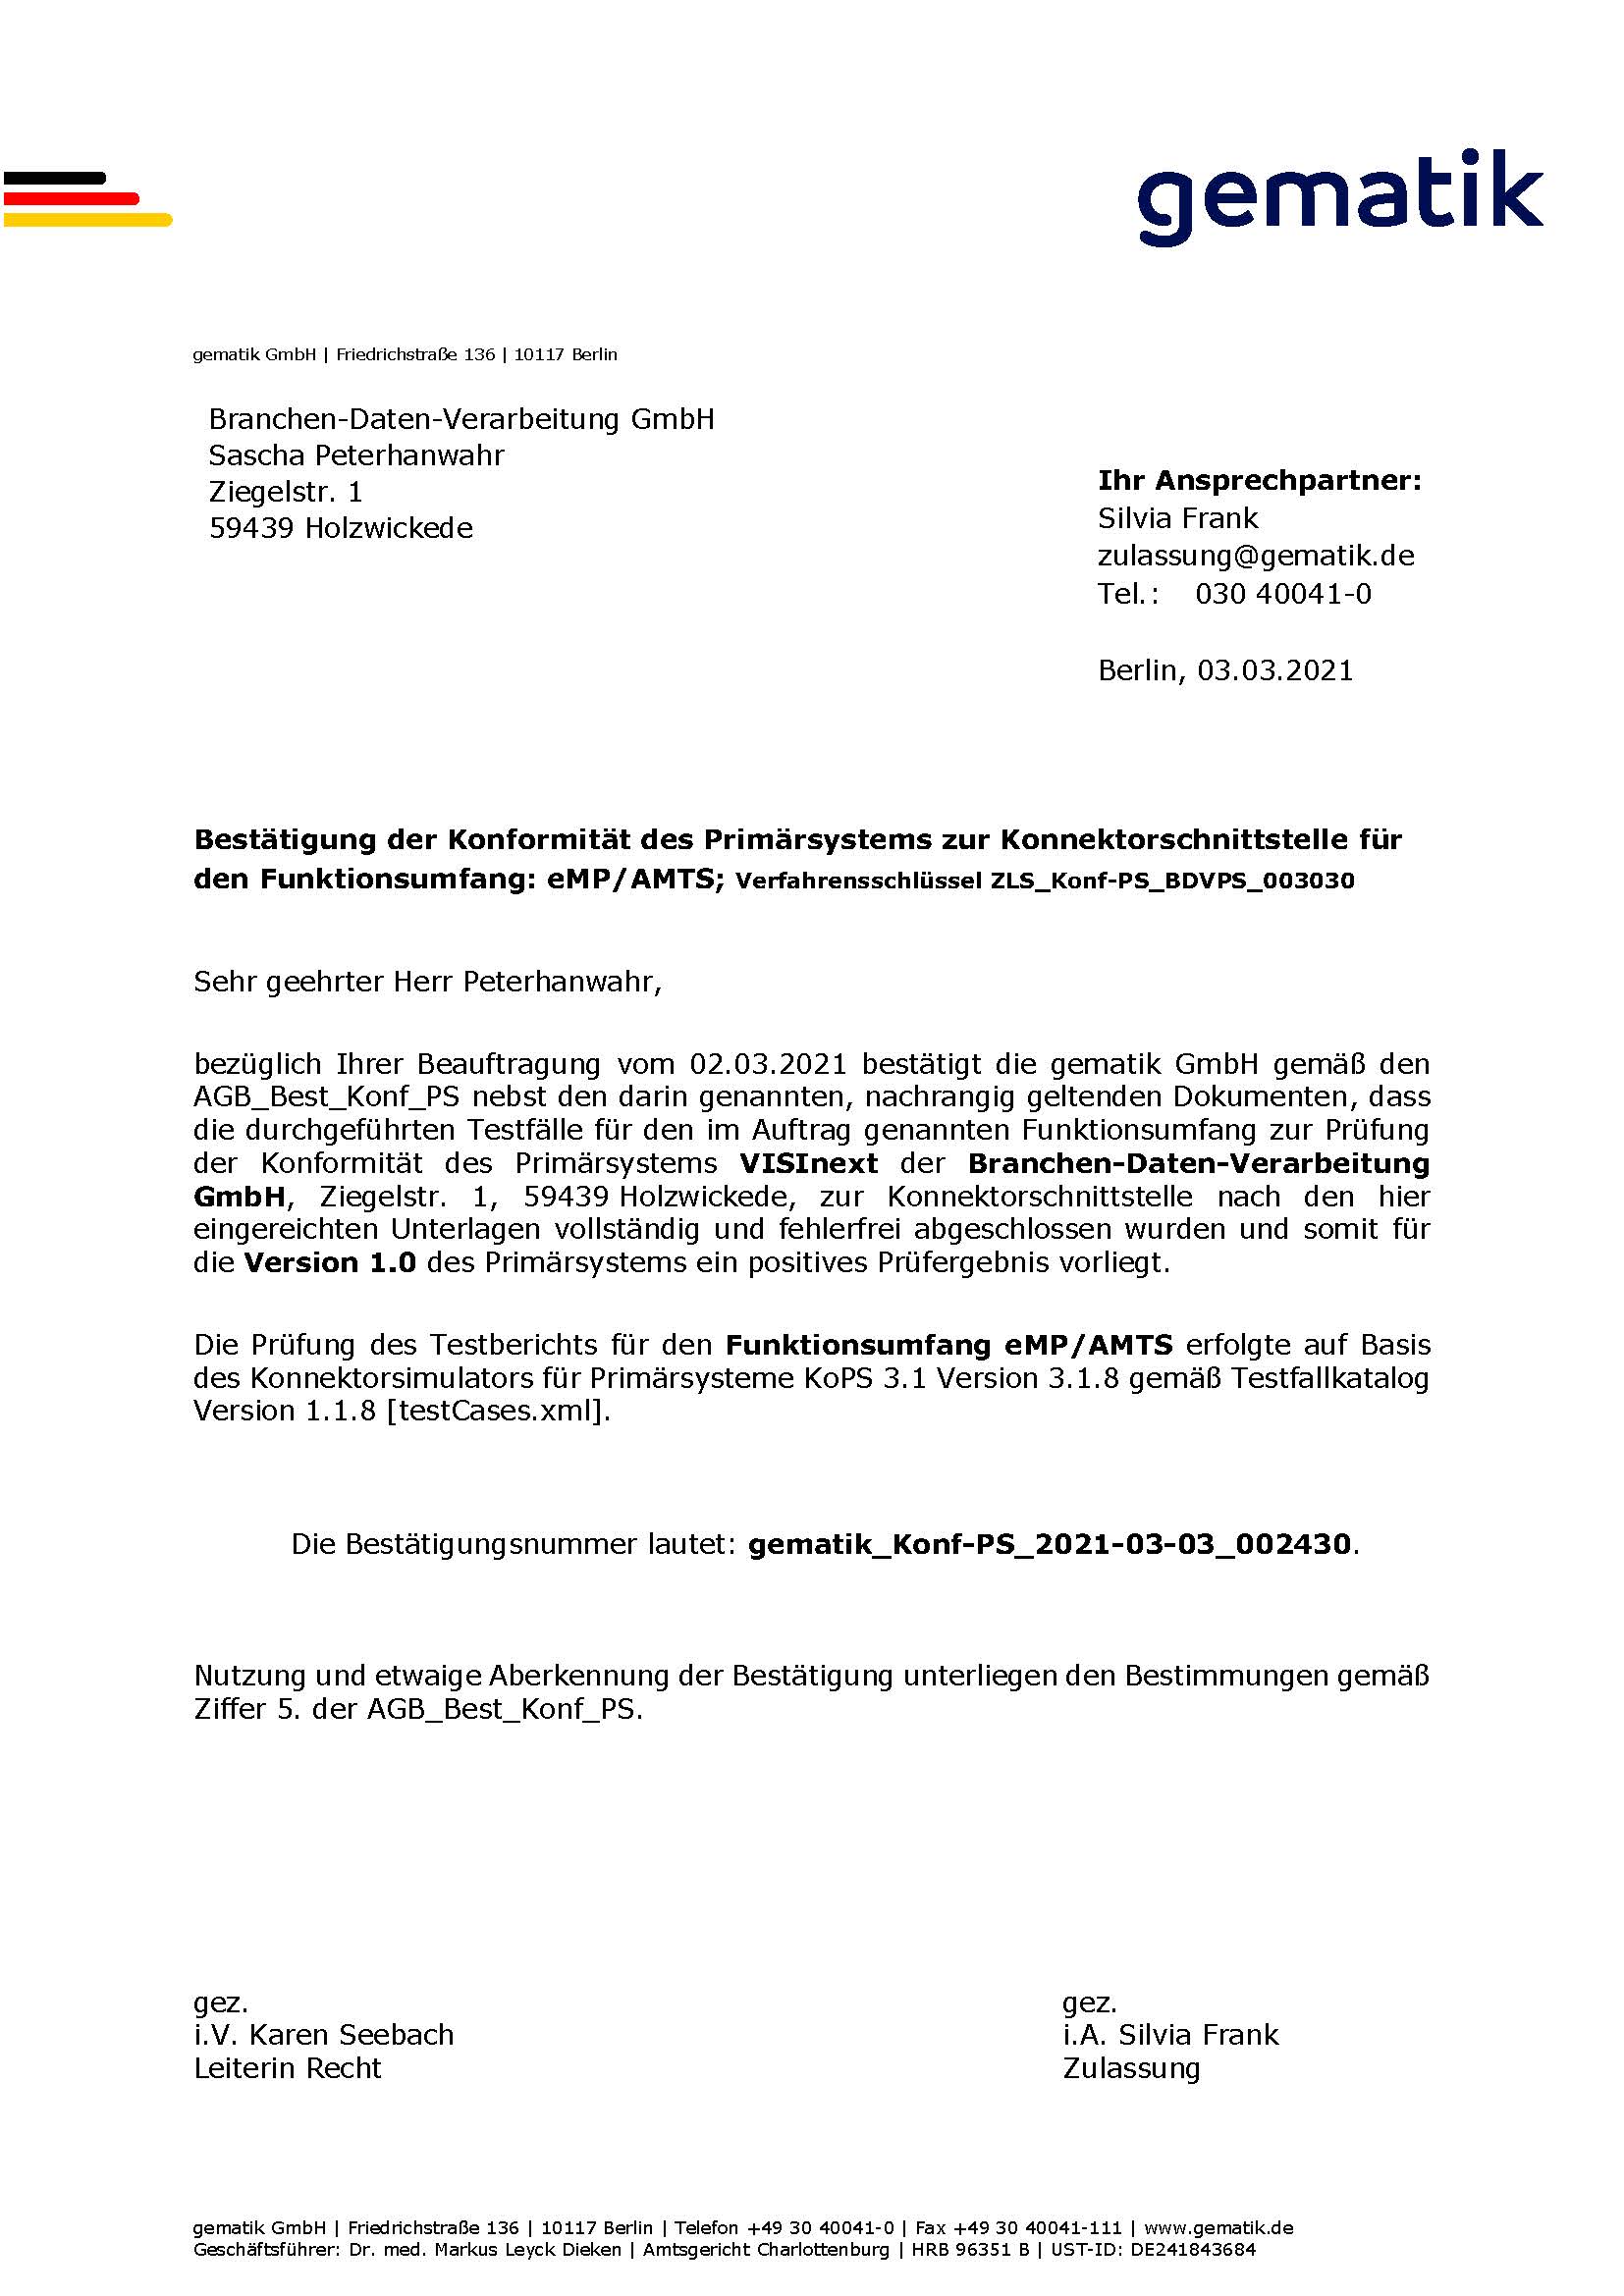 VISInext ePA-/AMTS-Modul der BDV GmbH - Telematikinfrastruktur - gematik Zulassung